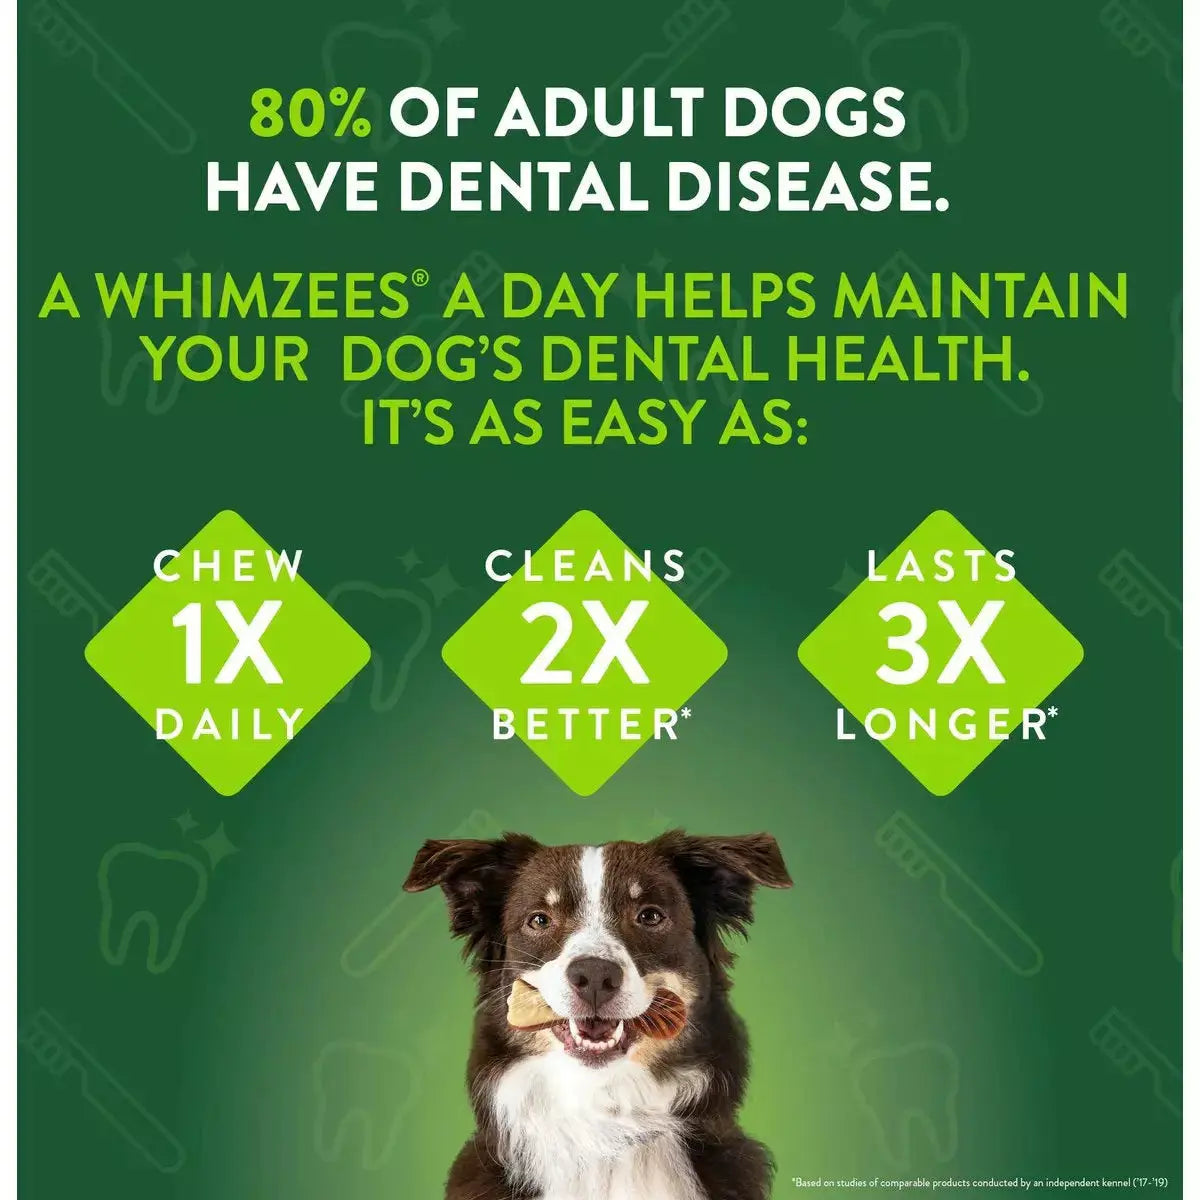 Whimzees Brushzees Daily Use Medium Dental Dog Treats 7.4 oz Whimzees